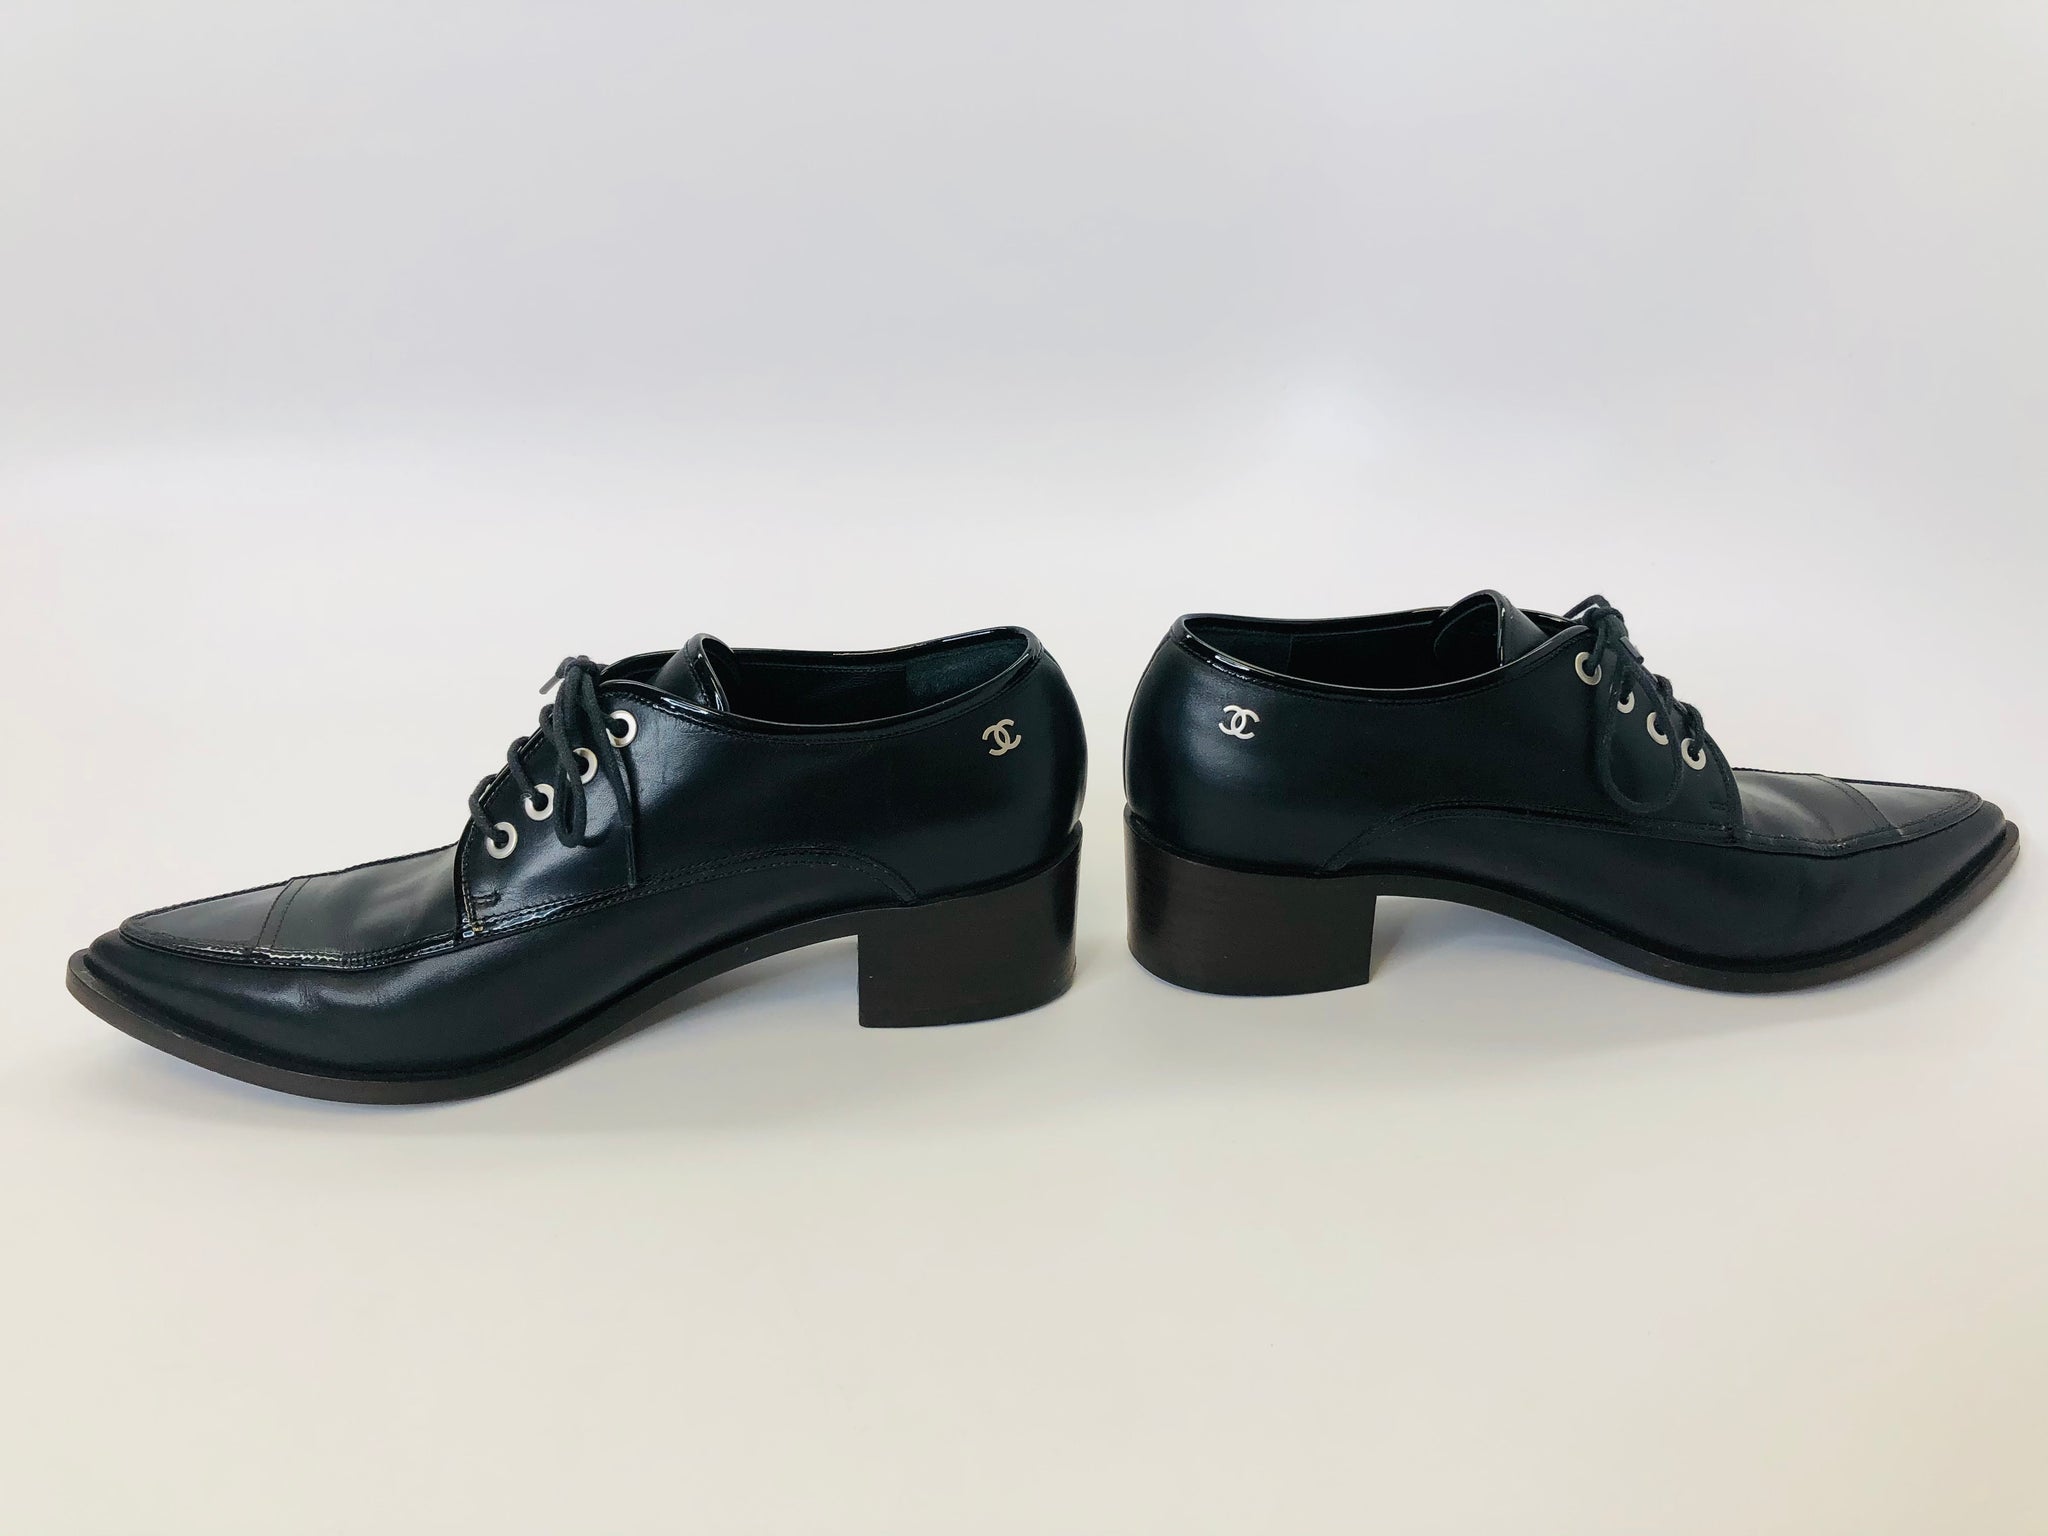 chanel black dress shoes